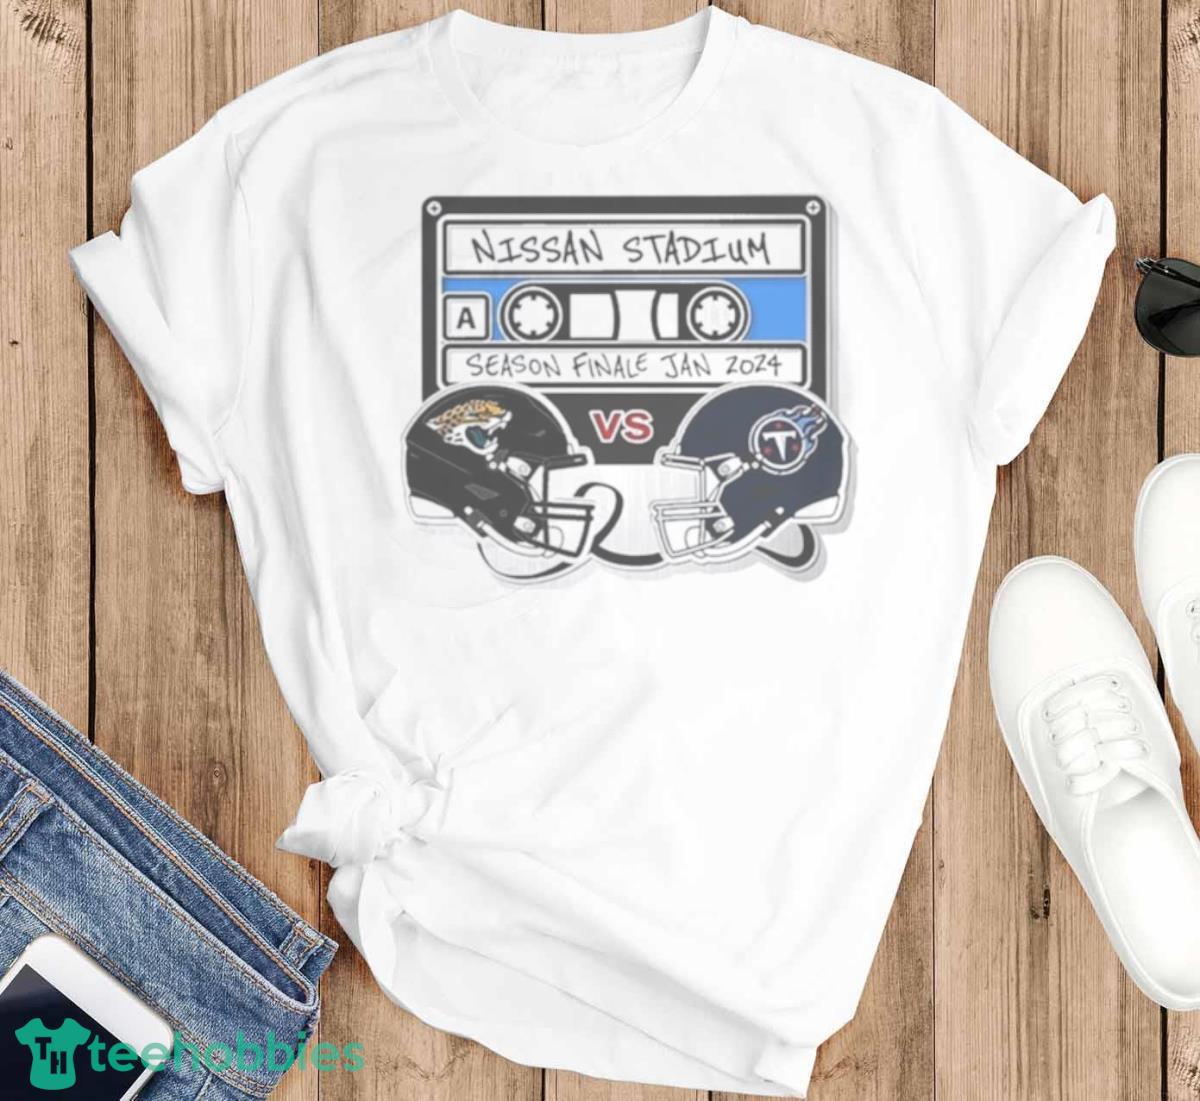 Jacksonville Jaguars Vs Tennessee Titans Gameday Nissan Stadium Season Finale Jan 2024 T Shirt - T-SHIRT FLAT